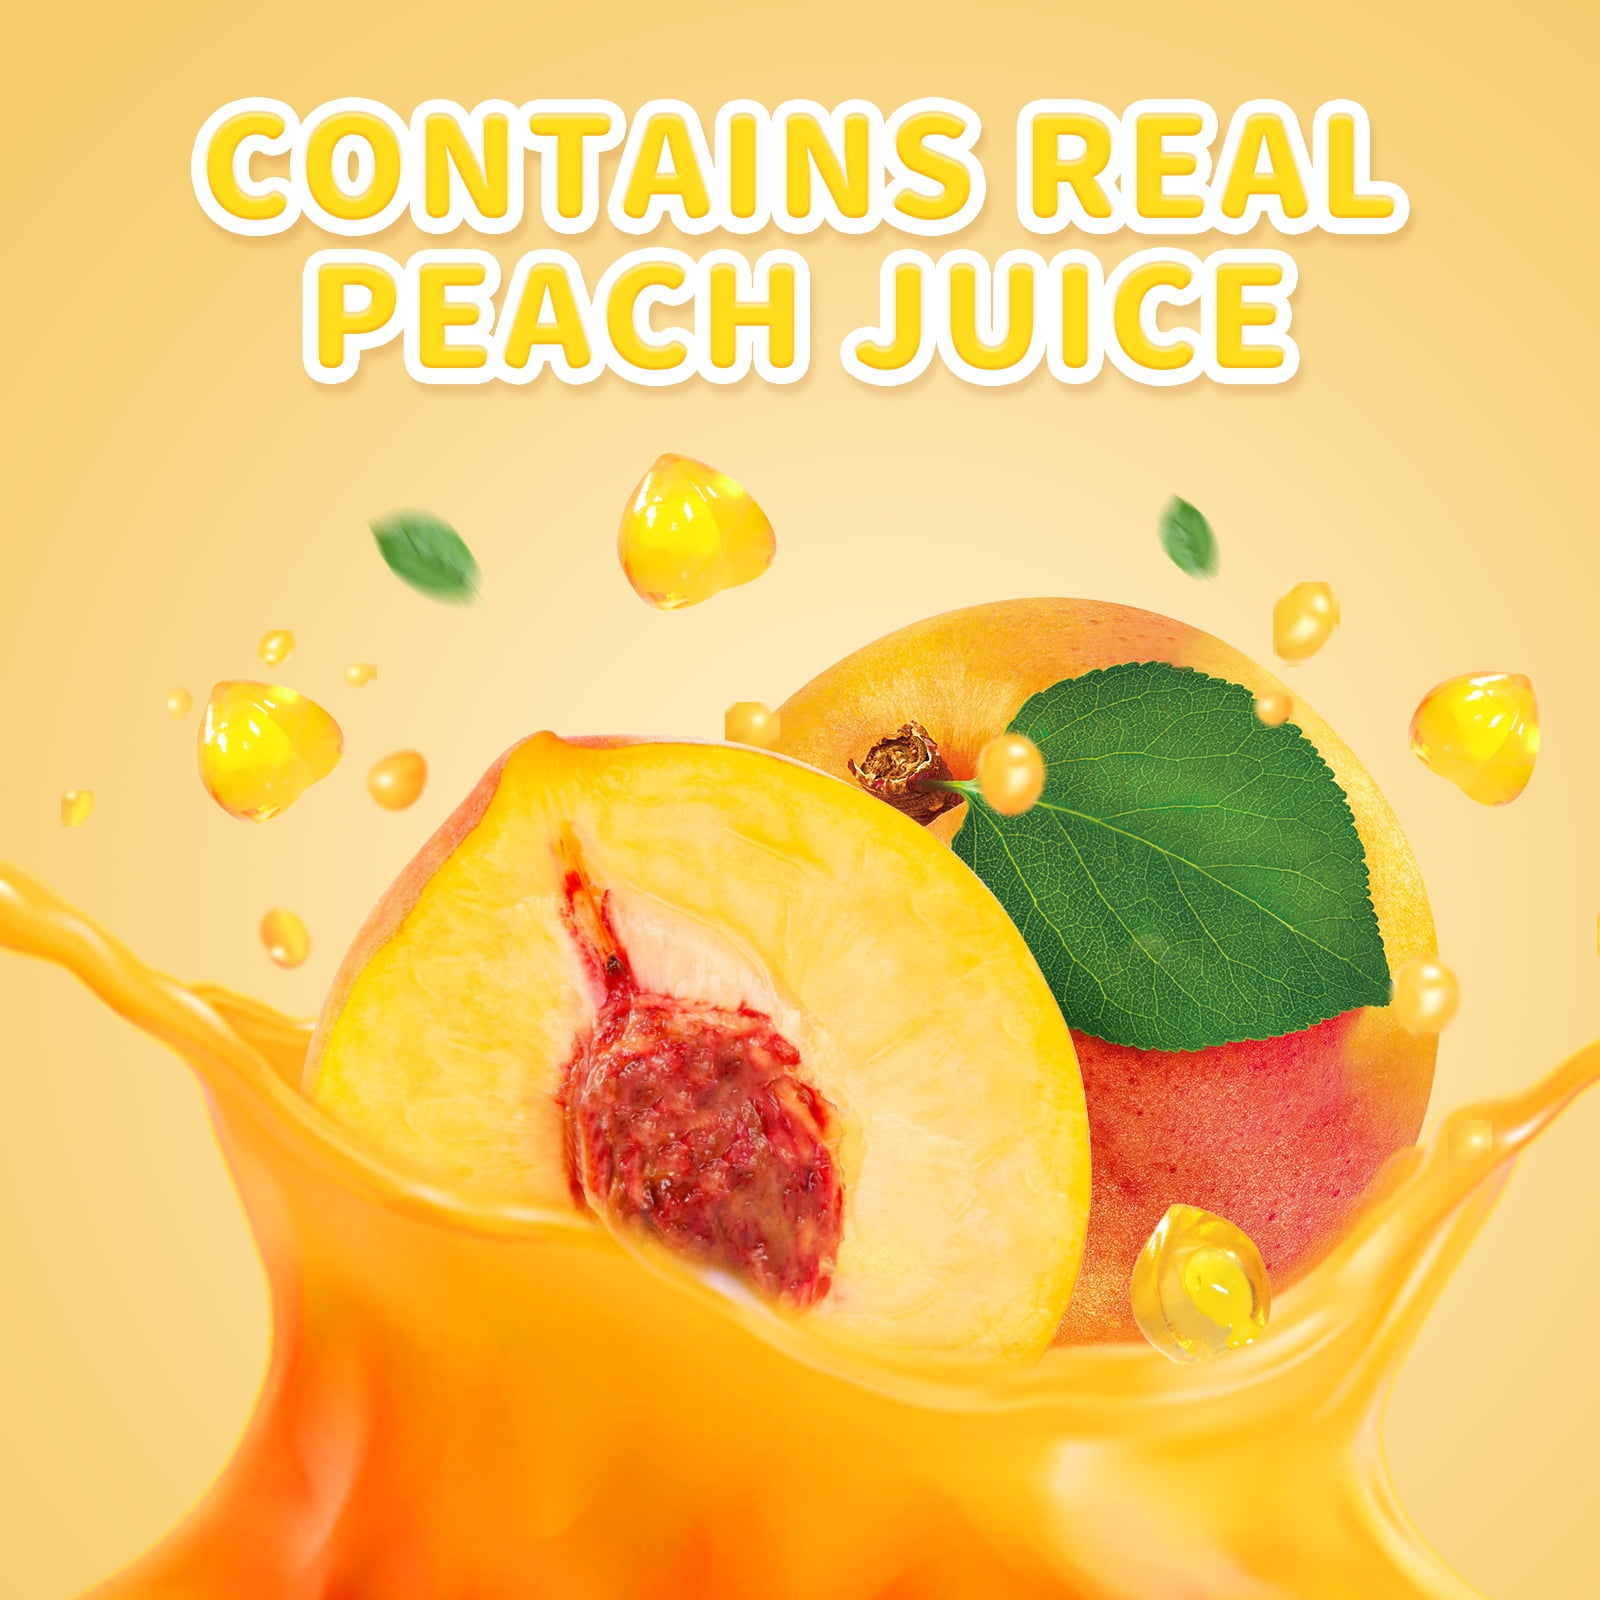 Amos Peach Gummy 4D Frootz Peach Candy Mini Center Indonesia